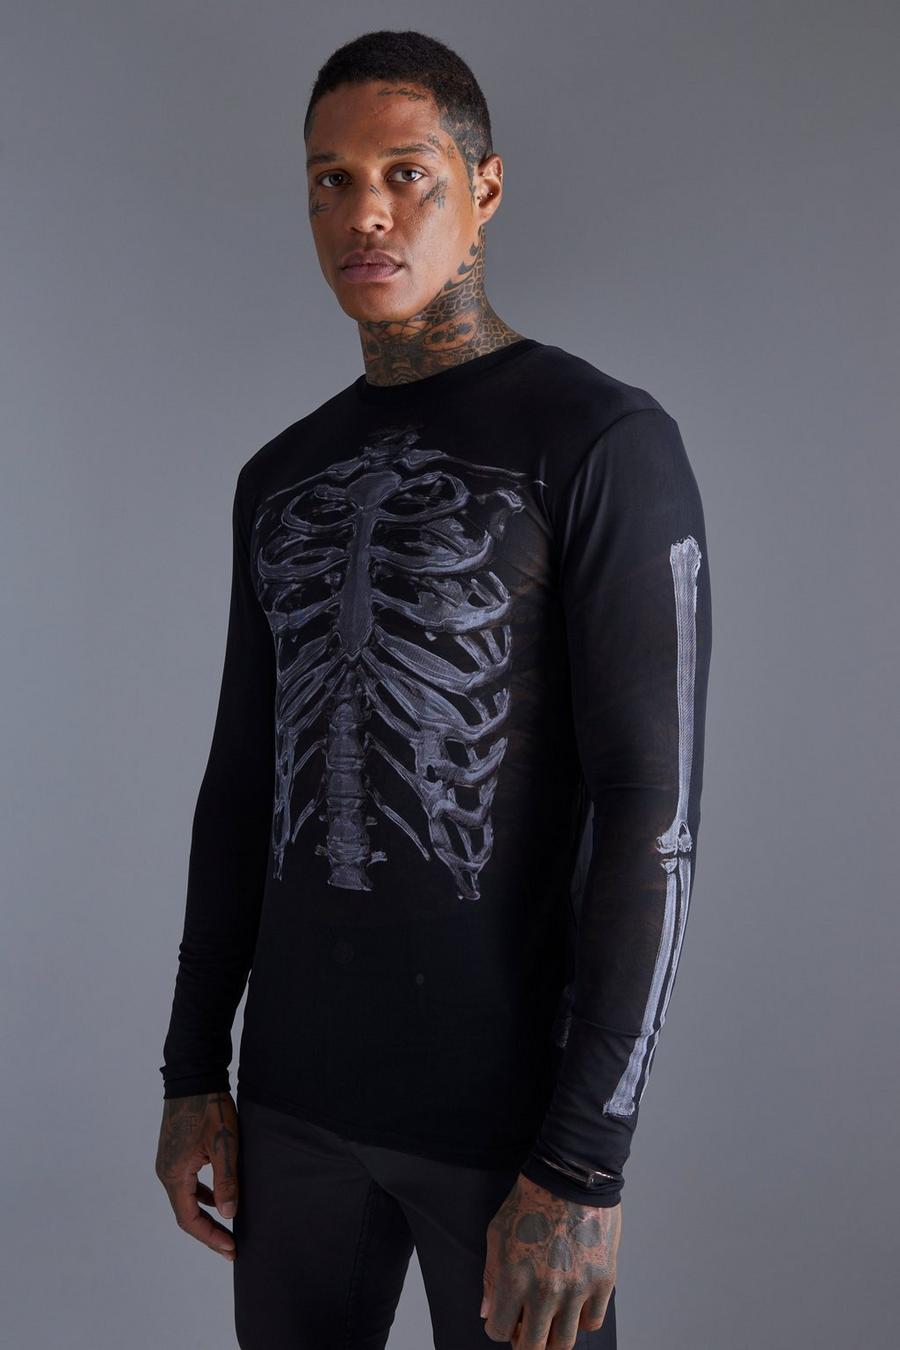 Black Muscle Mesh Skeleton Graphic T-shirt